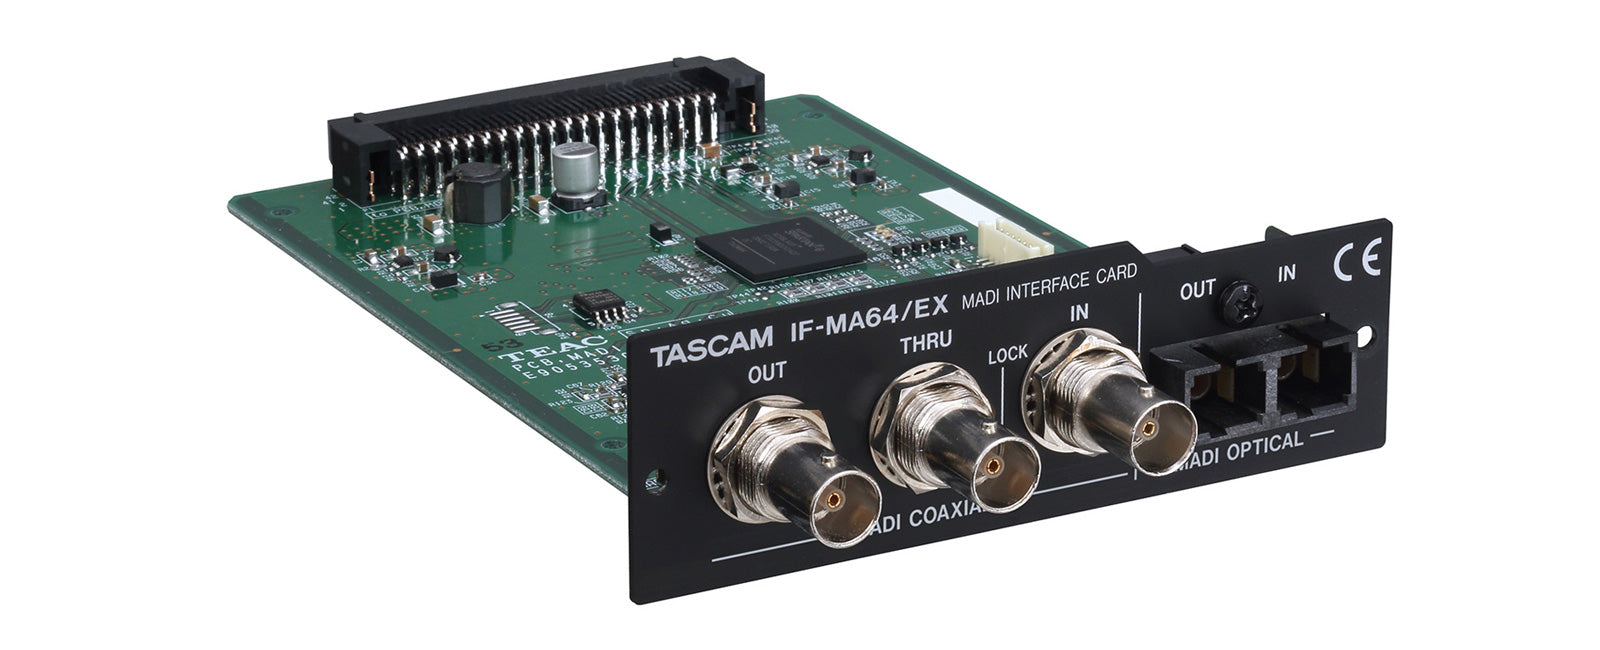 Tascam IF-MA64/EX - MADI digital interface card for DA-6400/DA-6400dp - 305broadcast